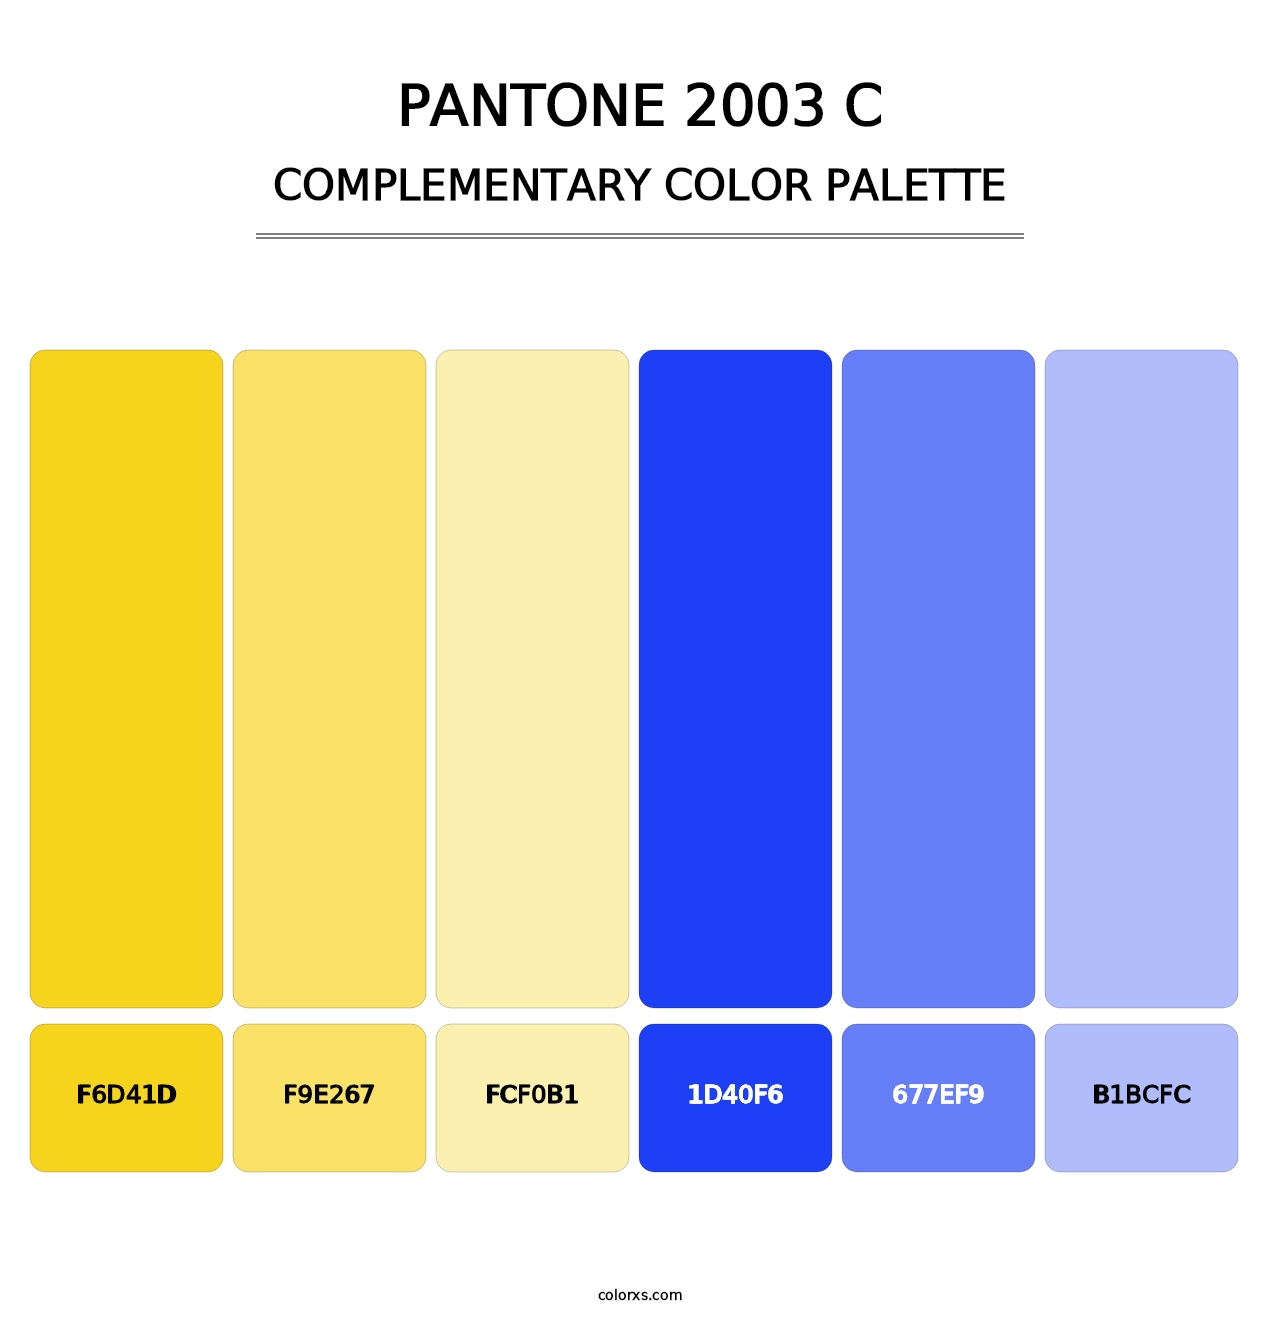 PANTONE 2003 C - Complementary Color Palette